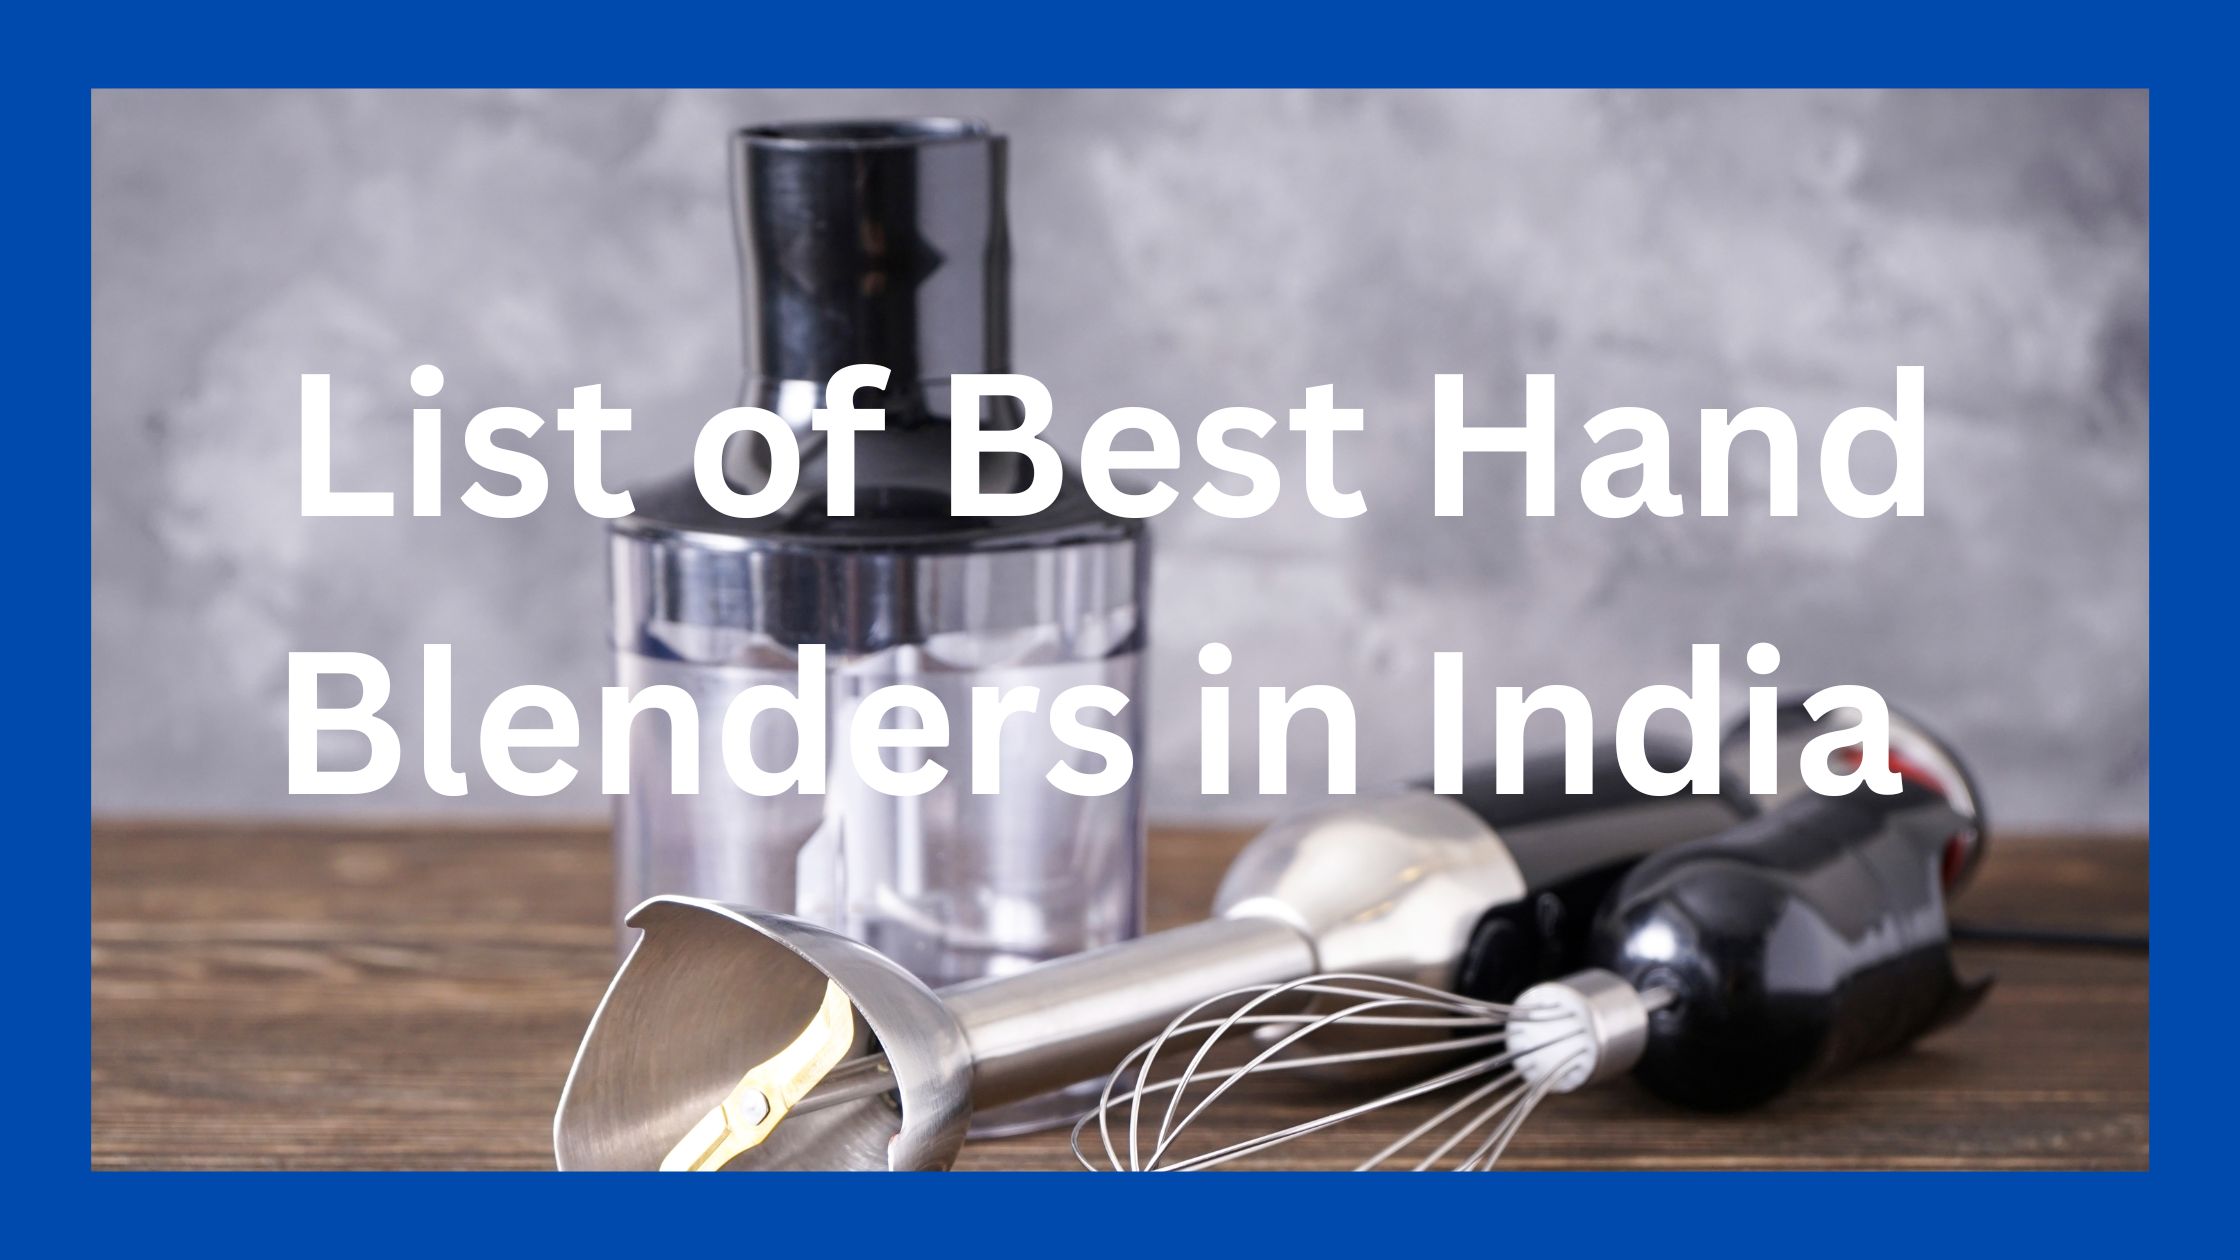 Best Hand Blender in India